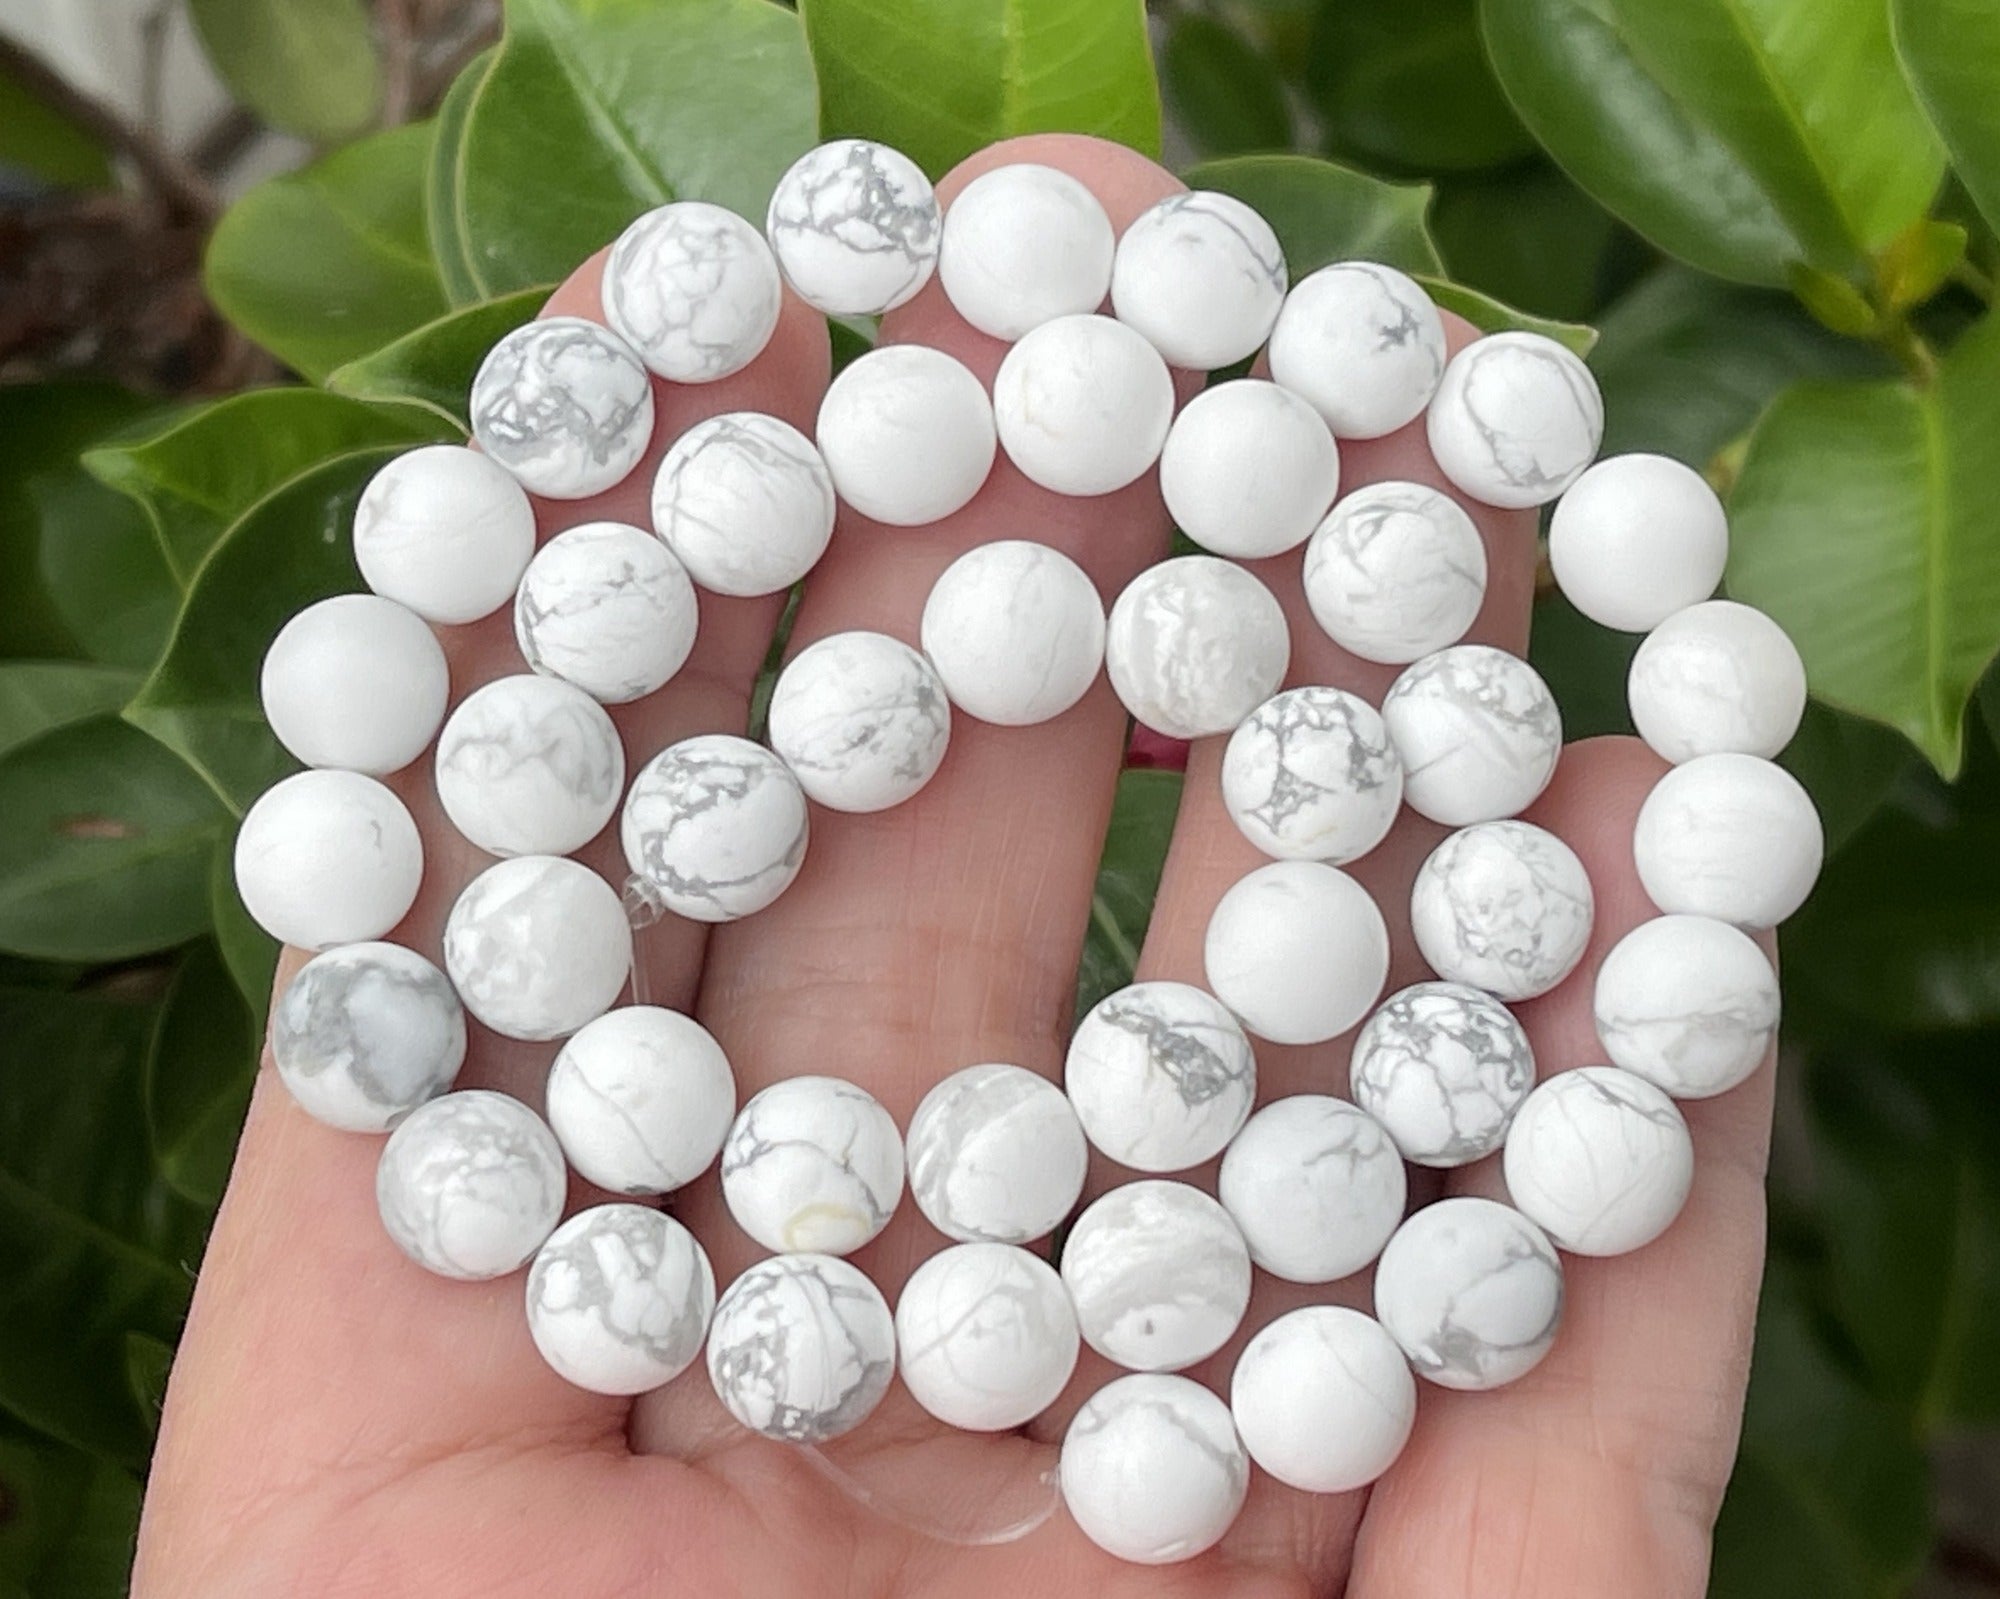 White Howlite matte 8mm round natural gemstone beads 15" strand - Oz Beads 